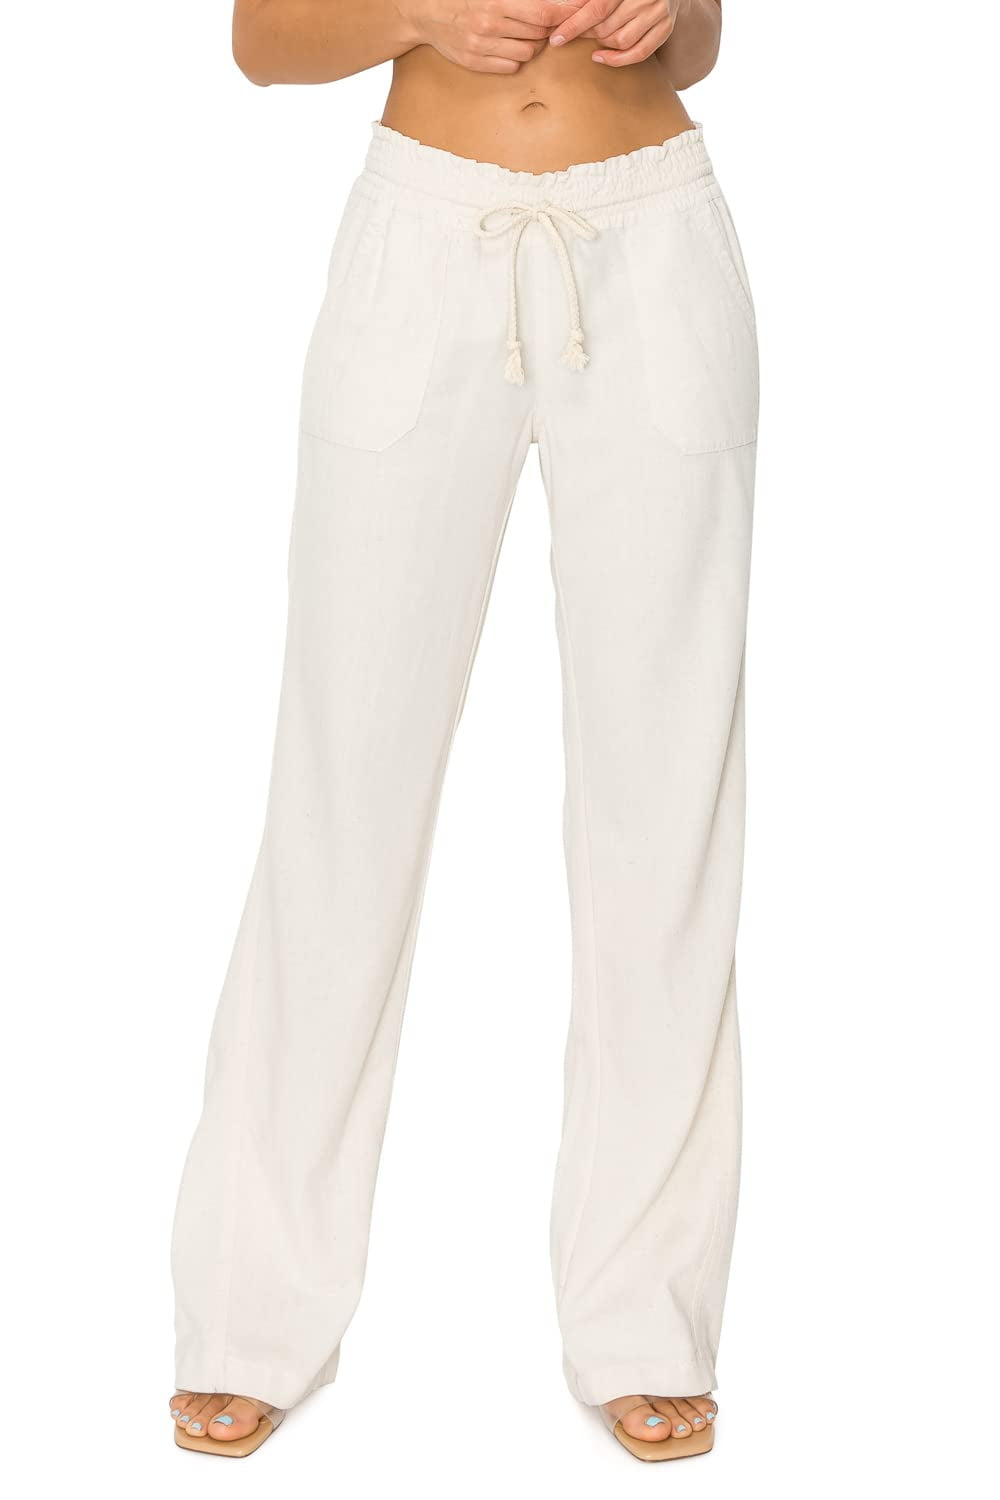 Cali1850 Women's Casual Linen Pants - 32 Inseam Oceanside Drawstring  Smocked Waist Lounge Beach Trousers with Pockets 7024Z-LNN Oatmeal XL 